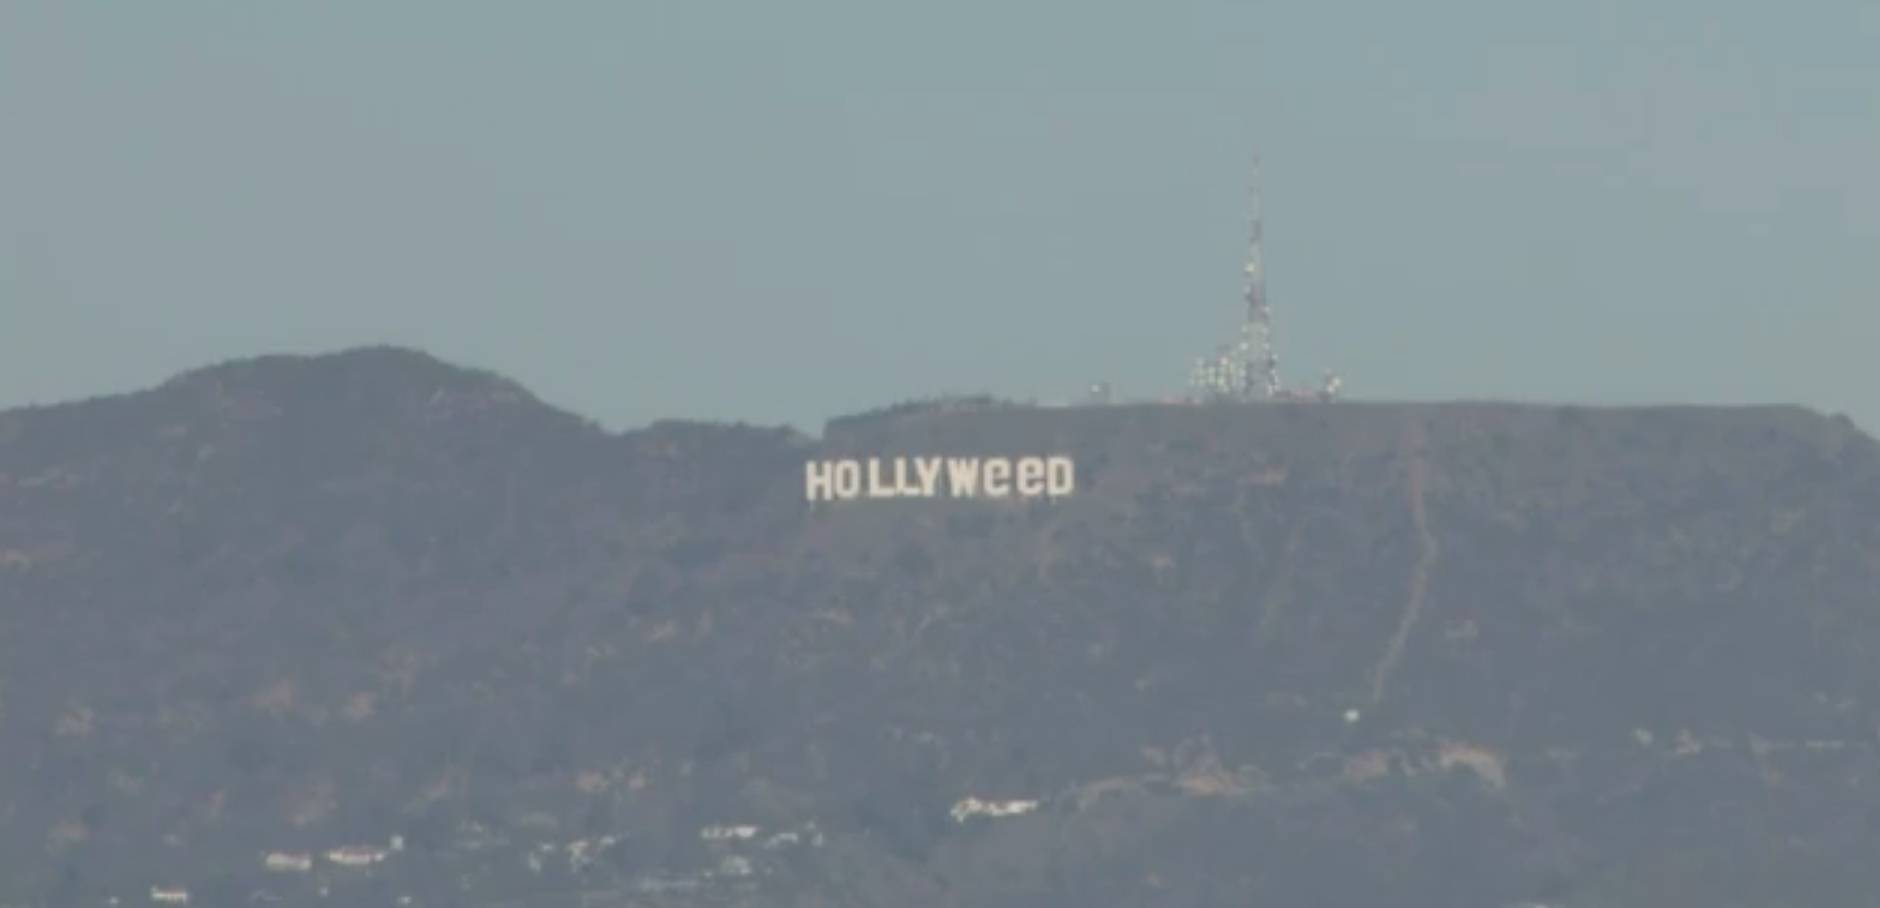 Novogodišnja spačka: Znak Hollywood postao 'Hollyweed'